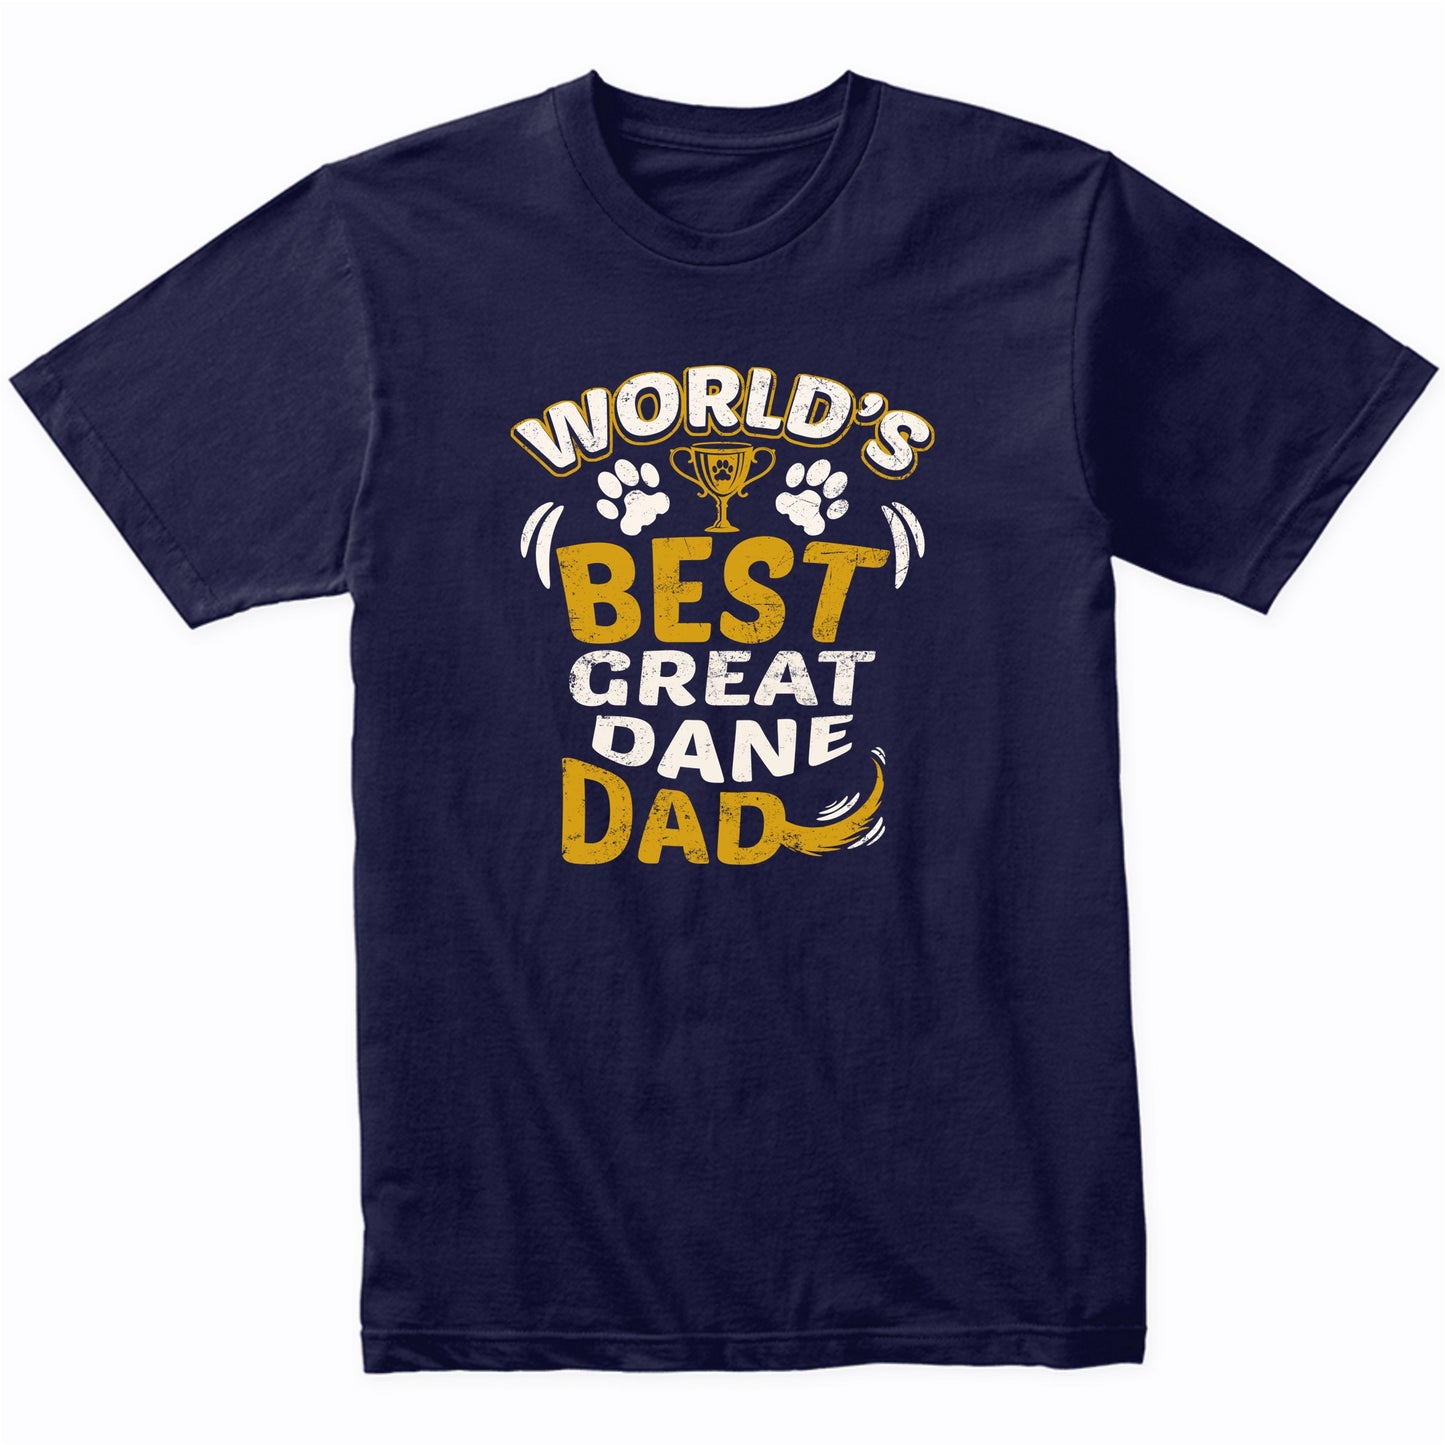 World's Best Great Dane Dad Graphic T-Shirt